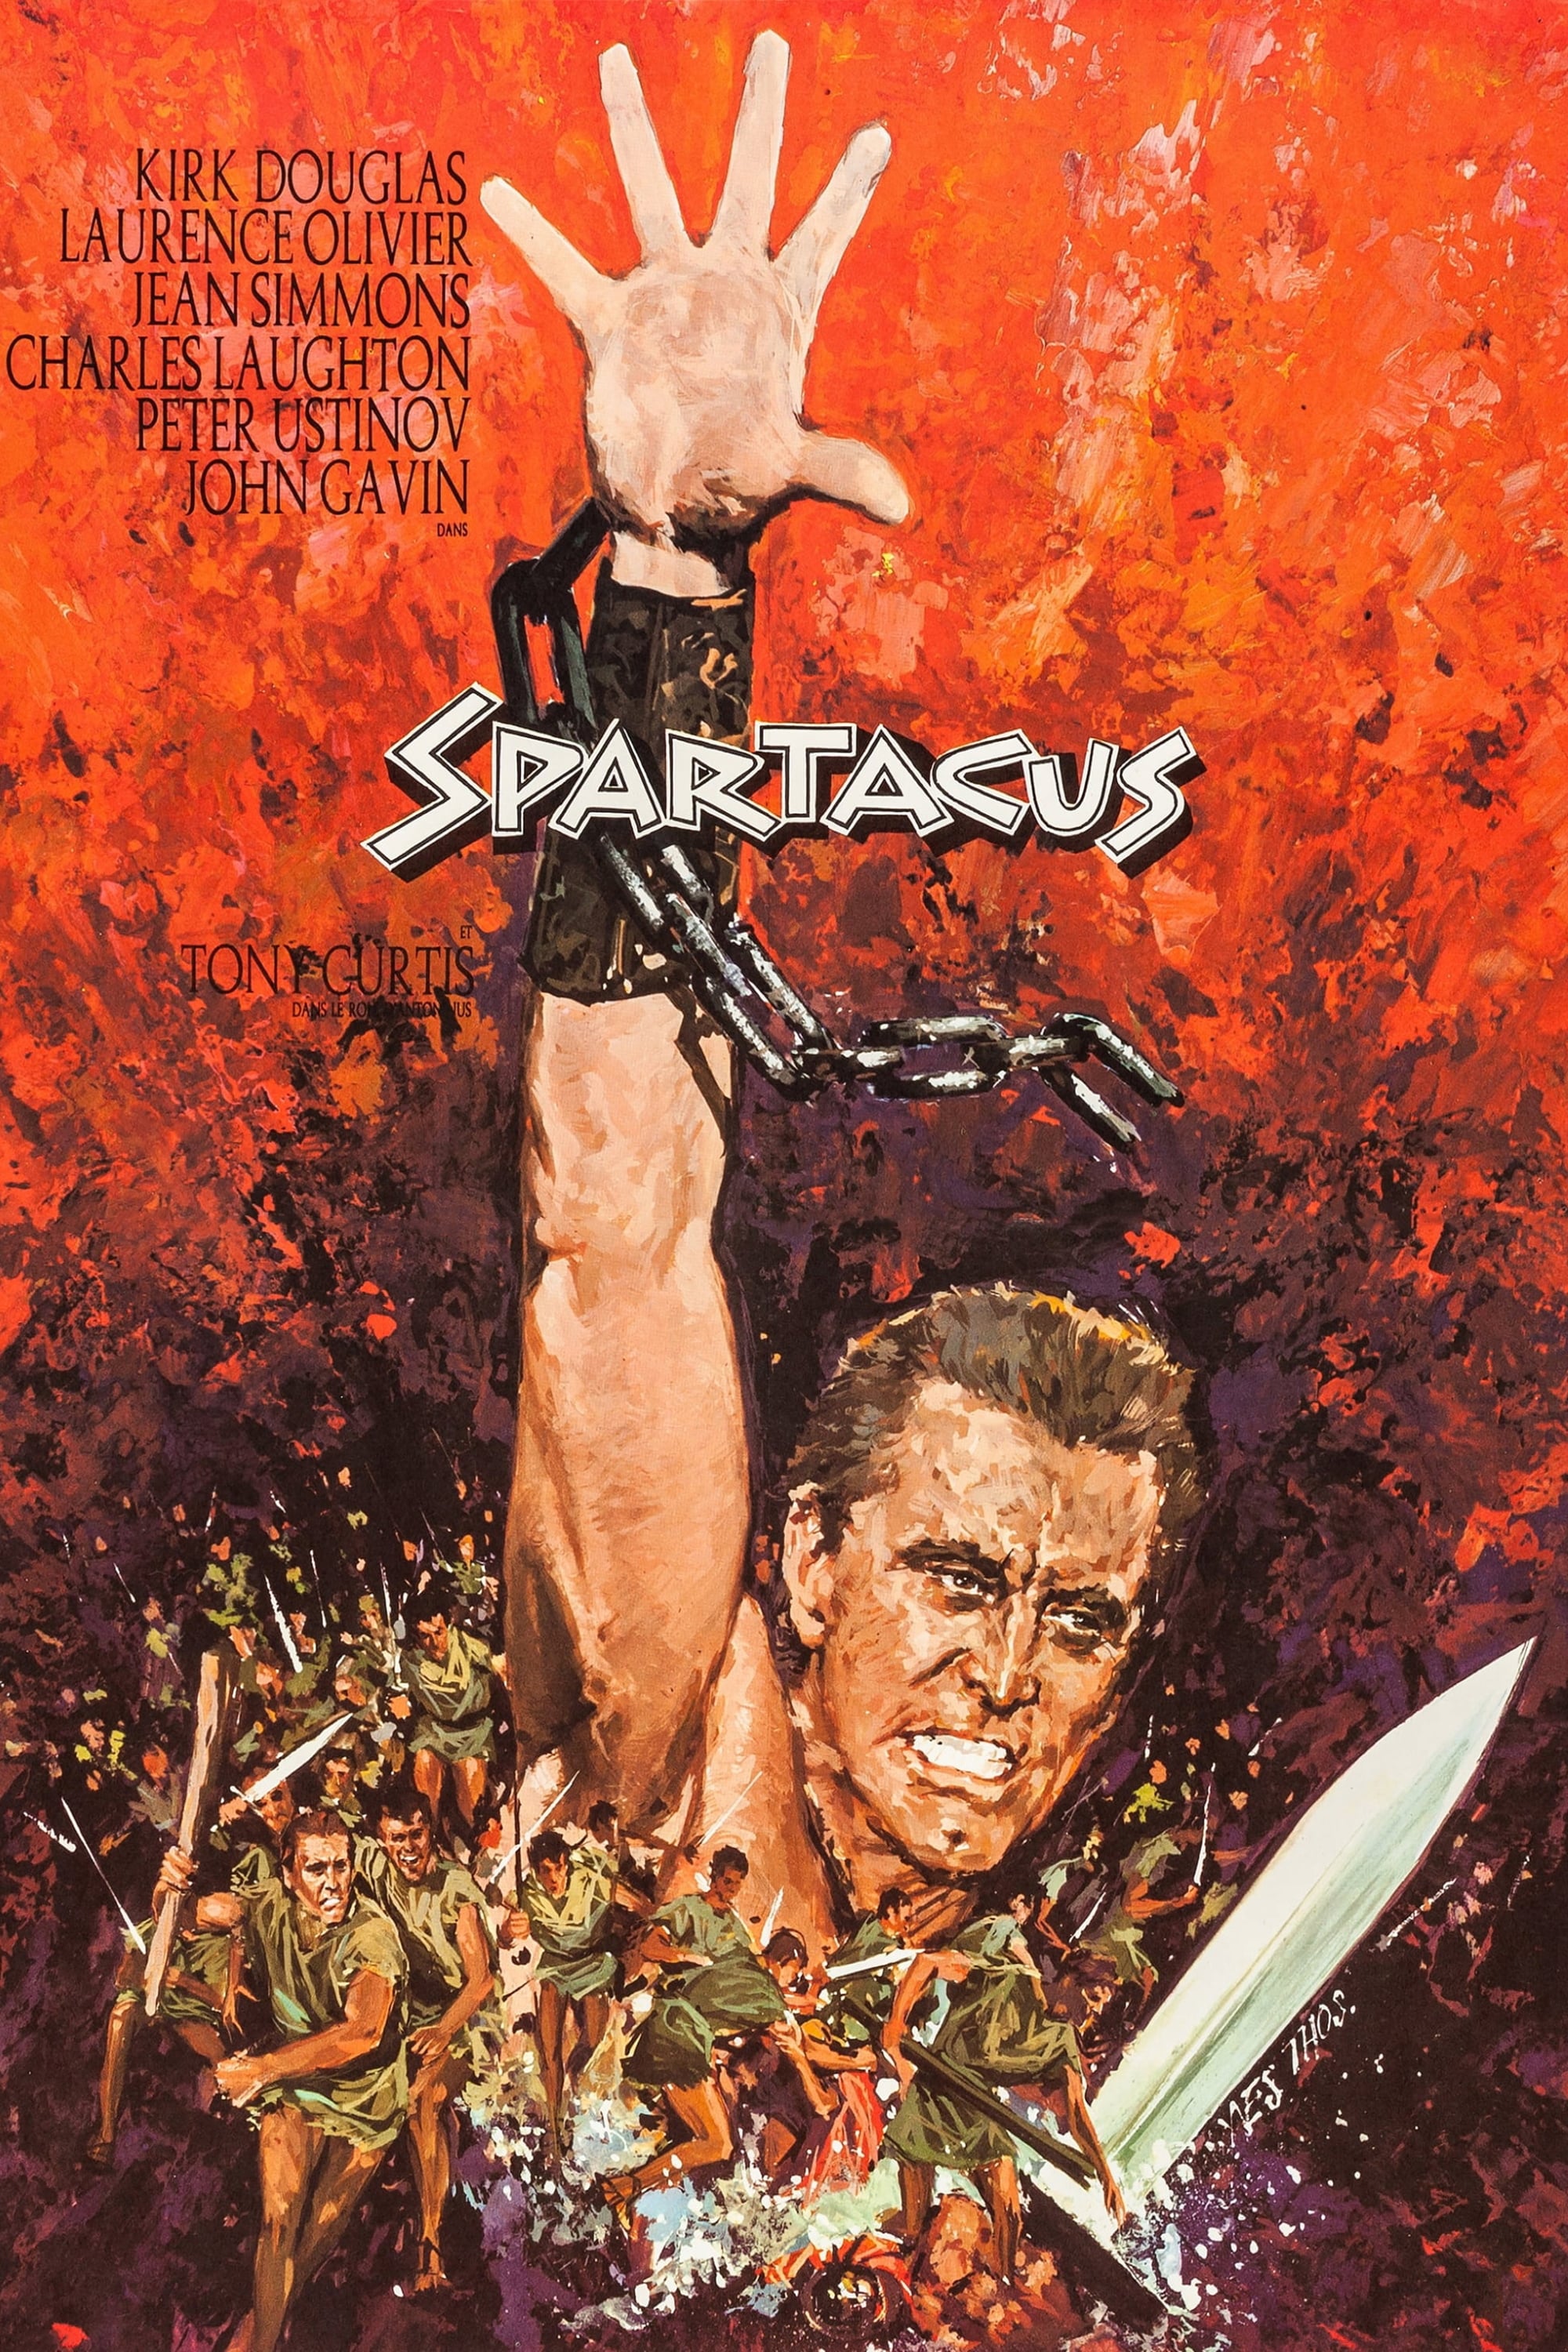 Spartacus Film Streaming